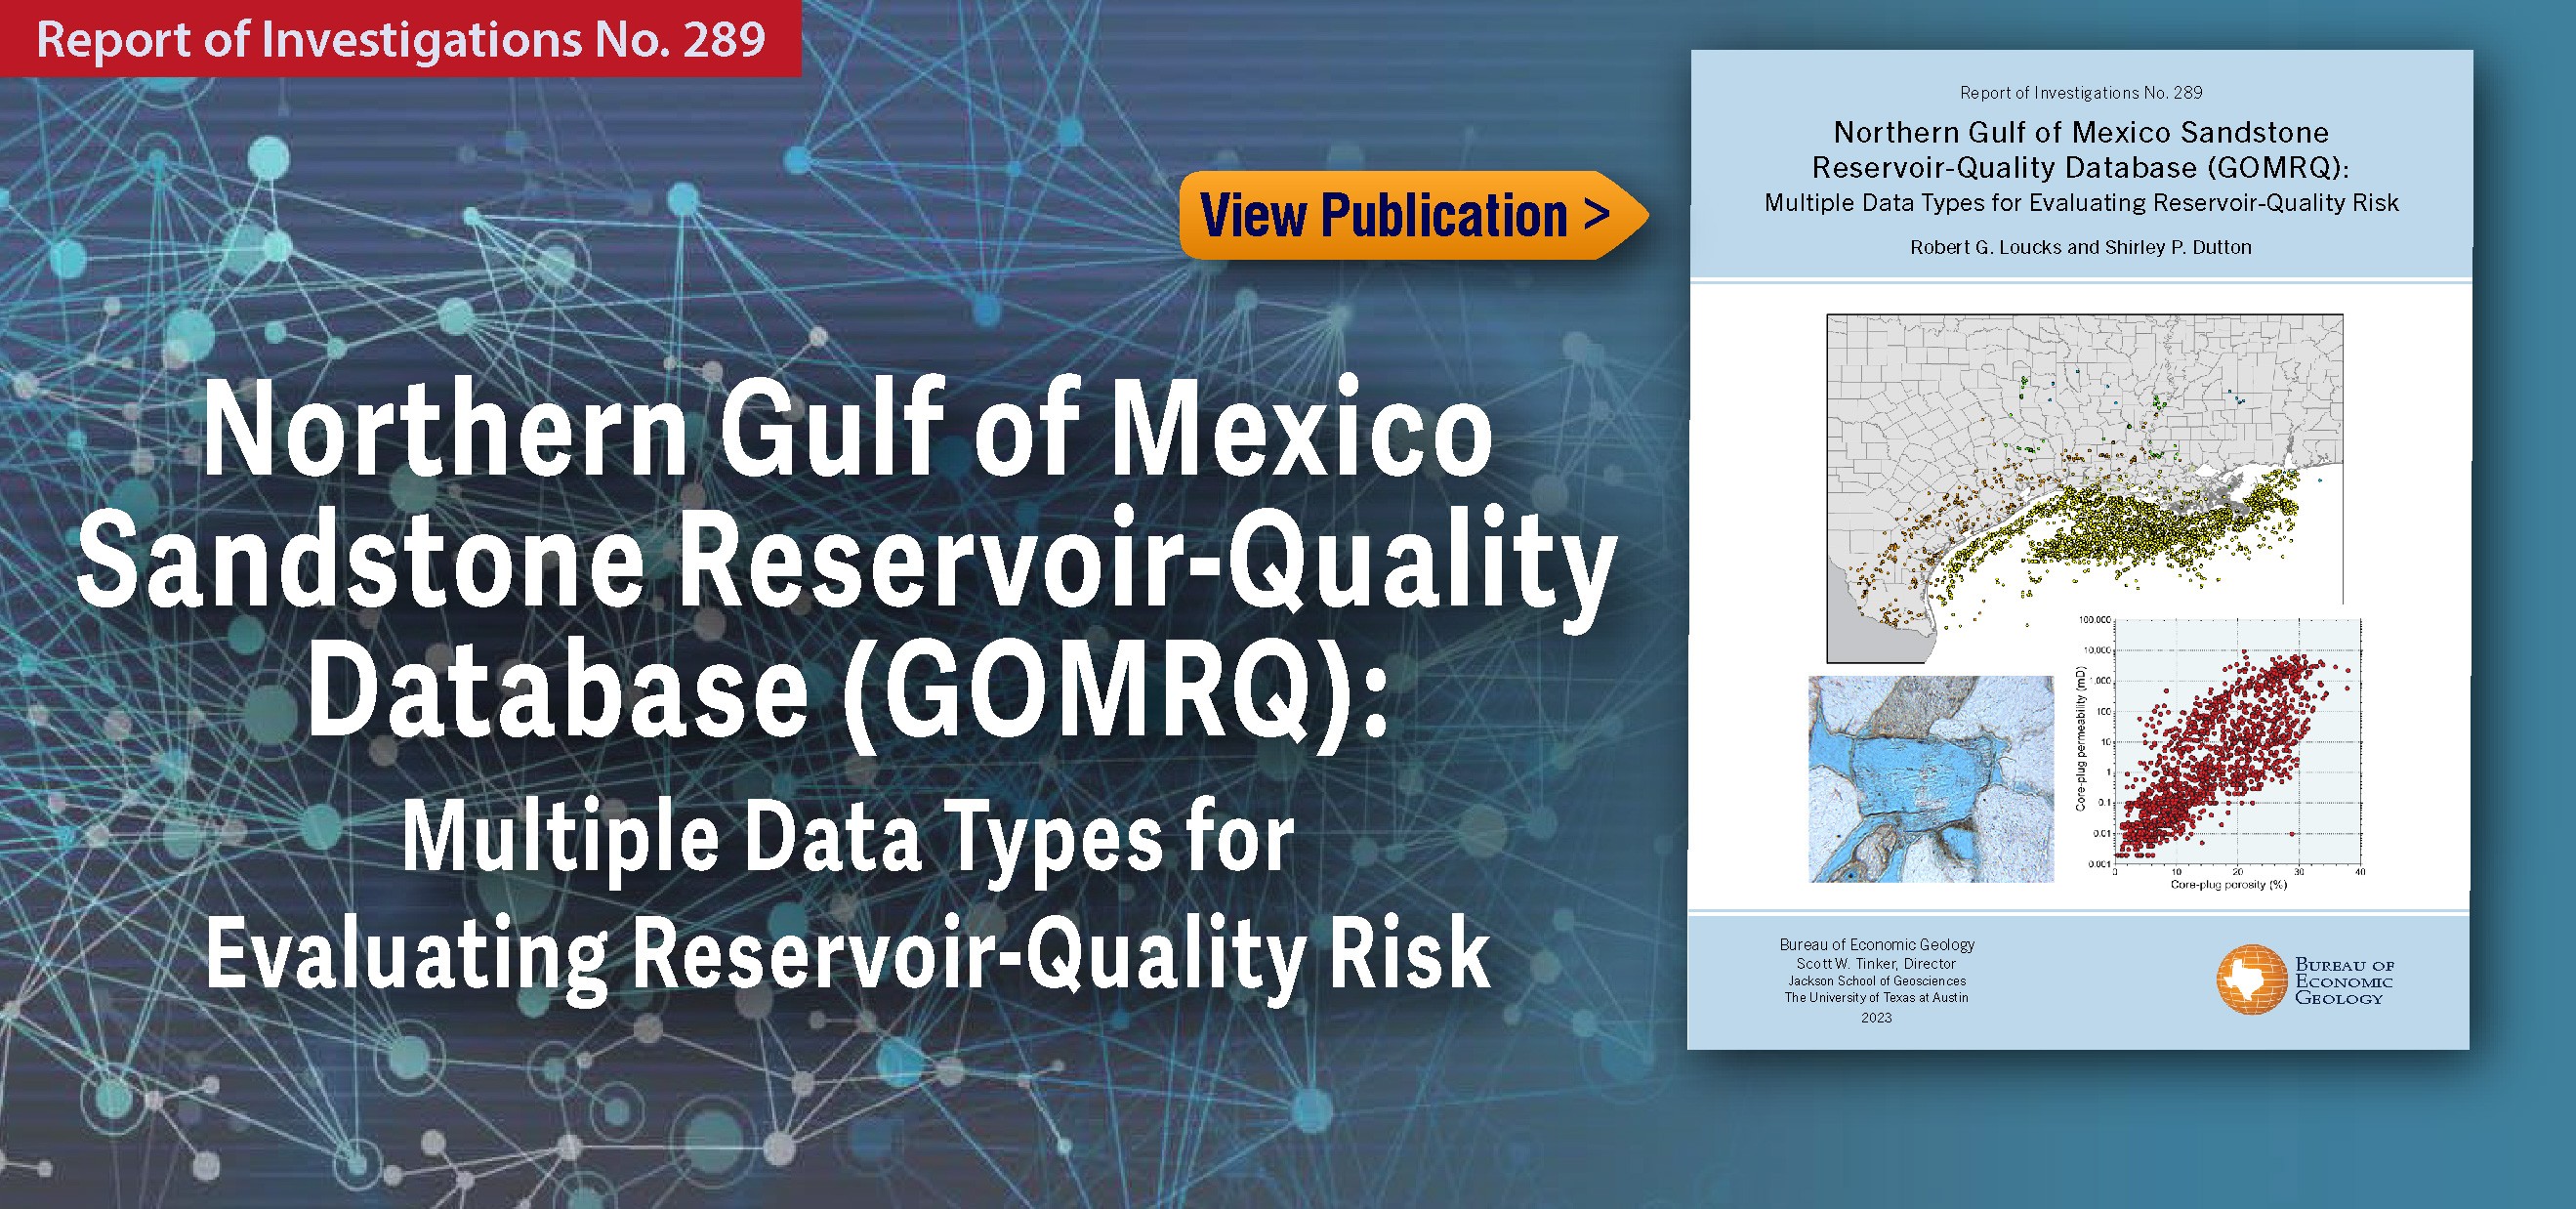 Northern Gulf of Mexico Sandstone Reservoir-Quality Database (GOMRQ) RI 289